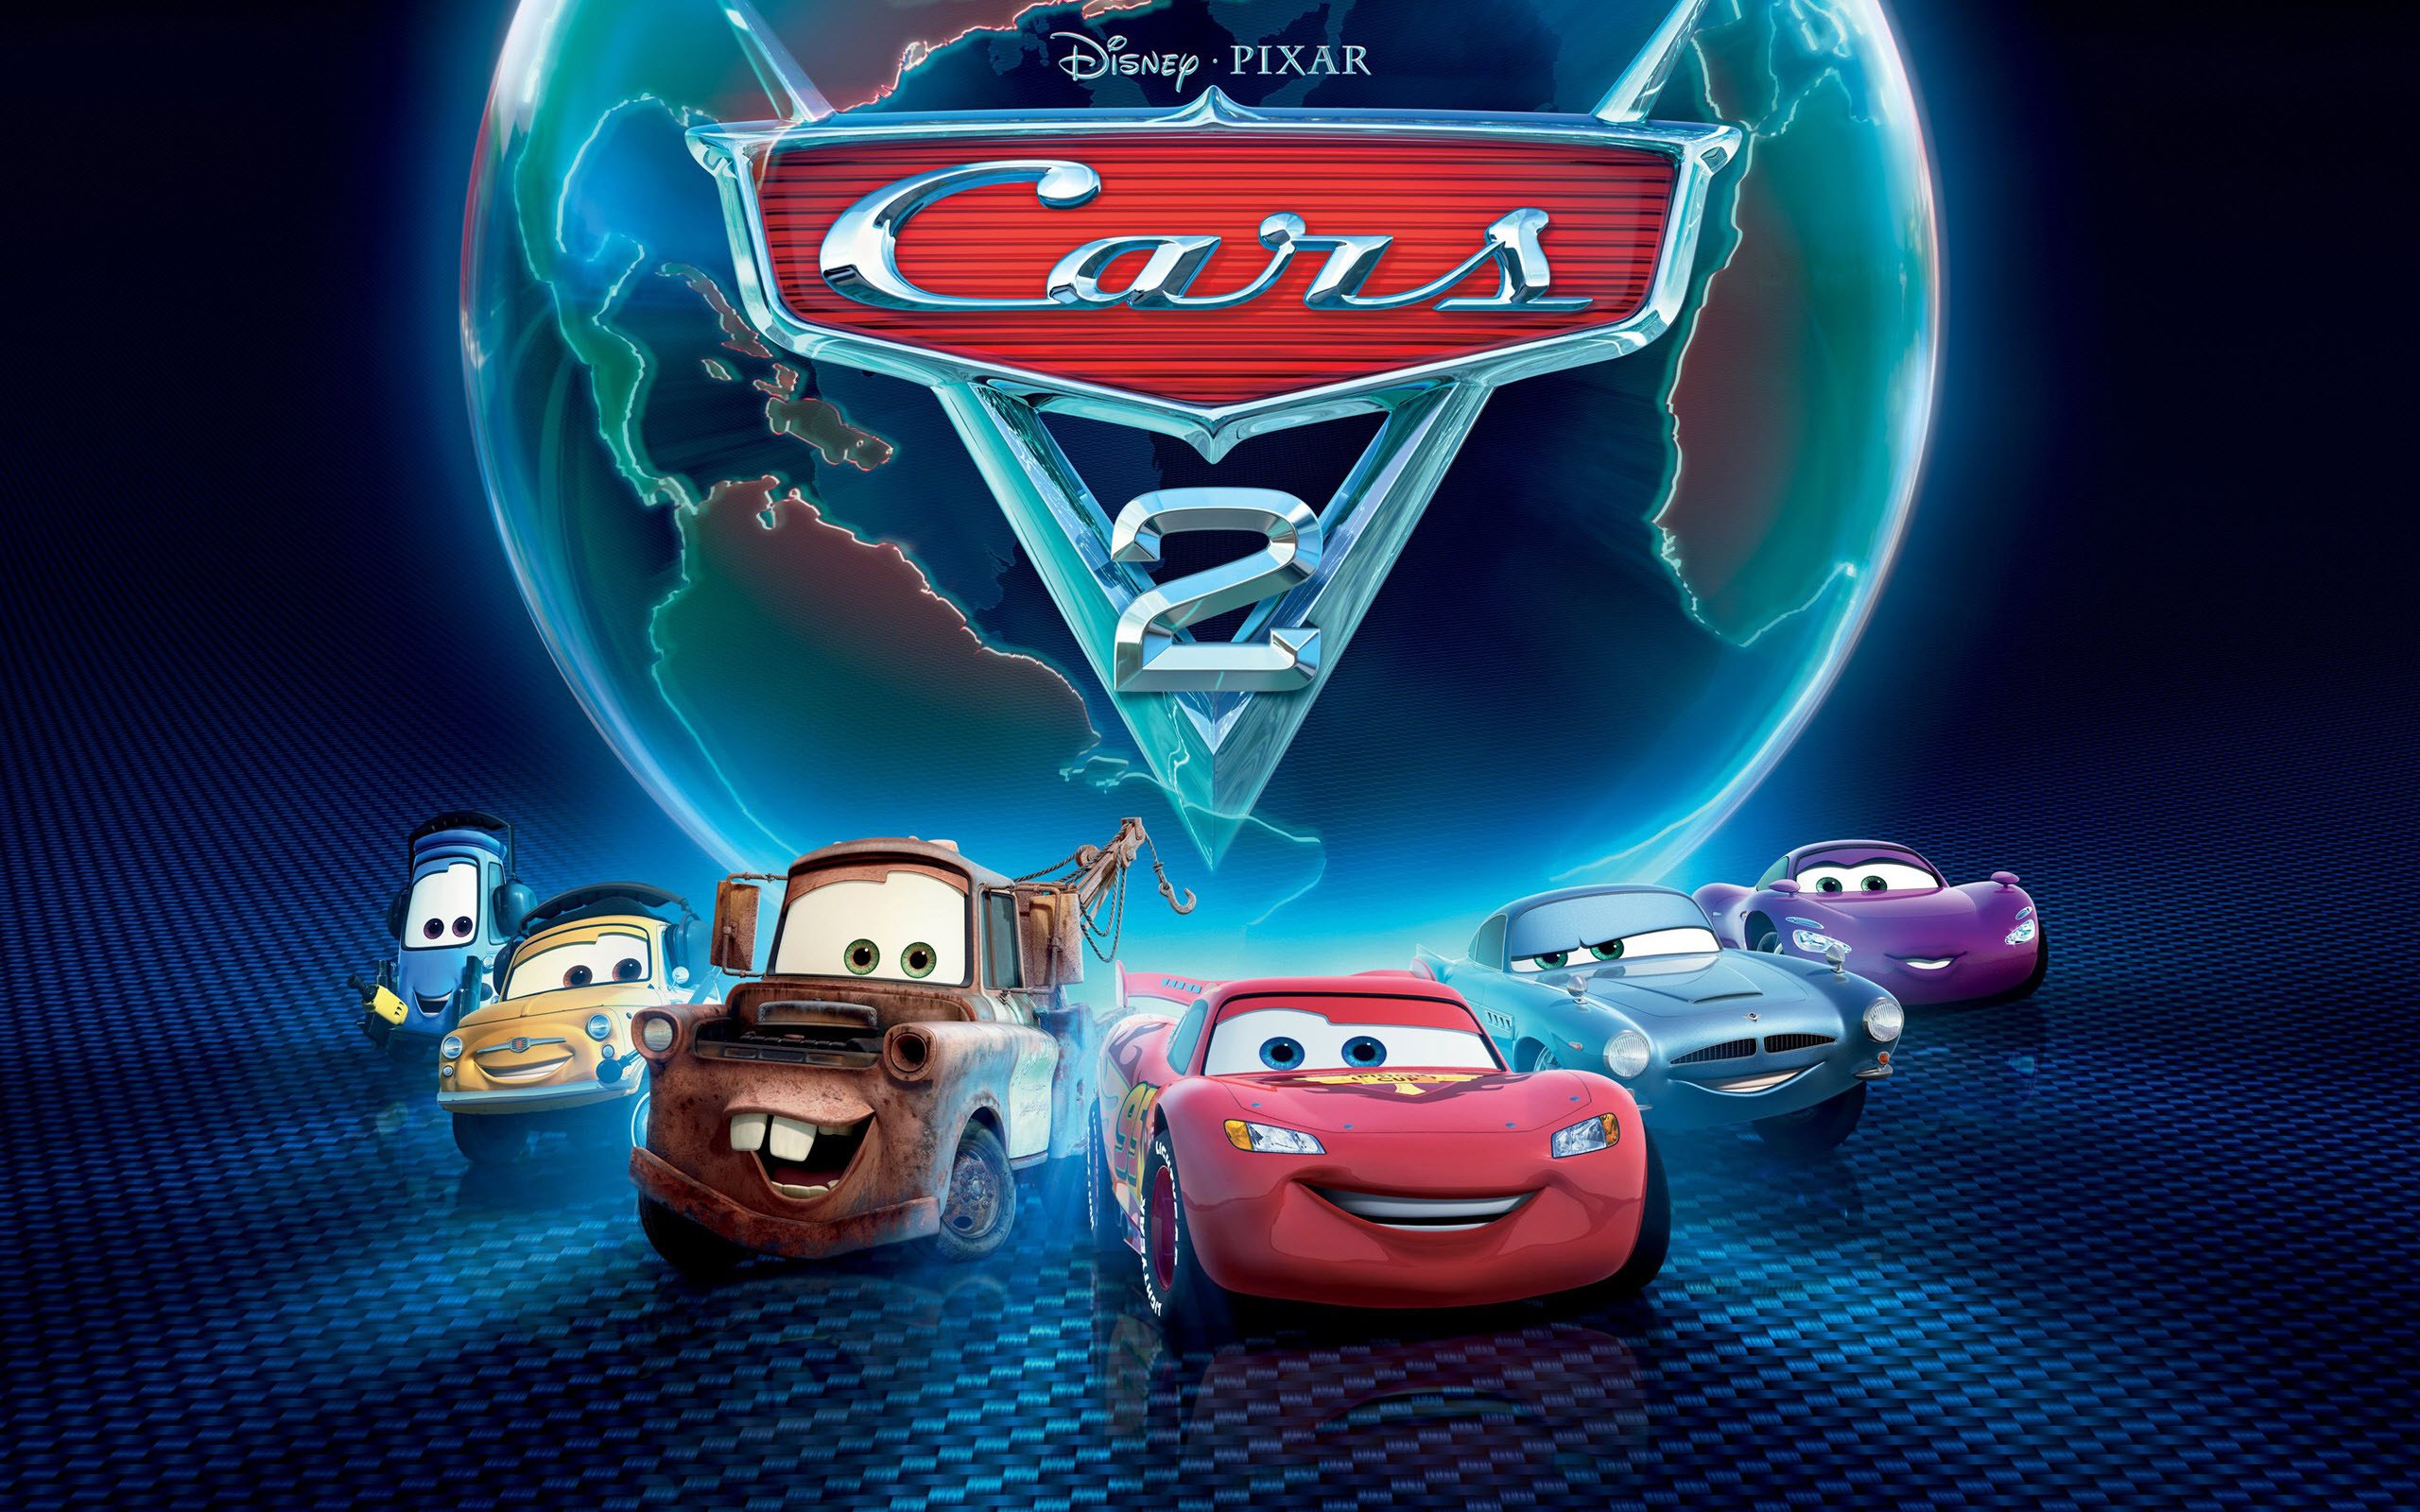 General 2560x1600 car Disney Pixar vehicle animated movies 2011 (Year) Pixar Animation Studios movies Movie Vehicles Cars 2